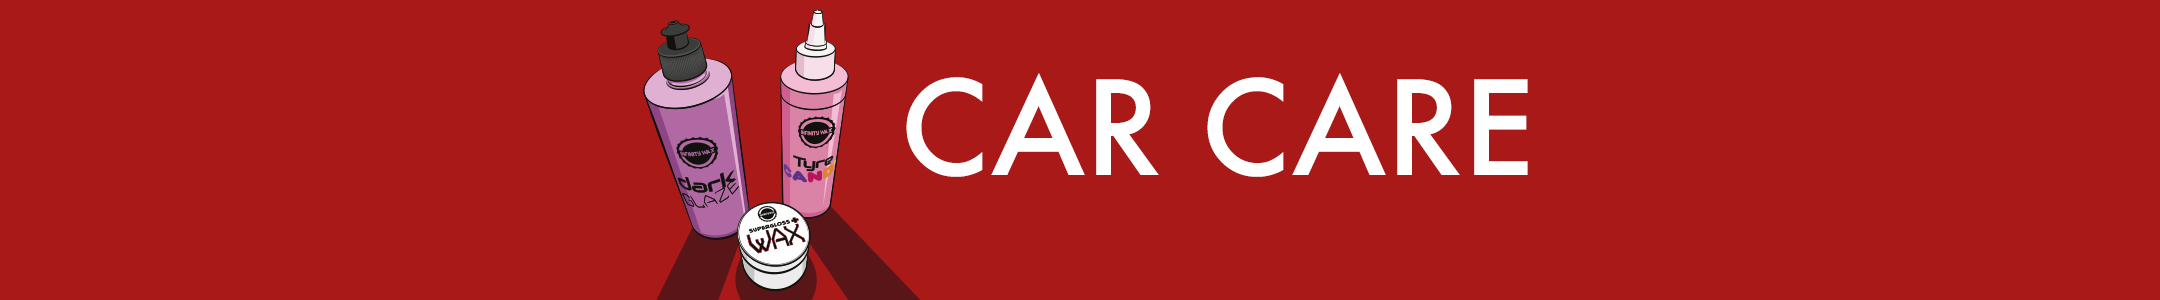 Car Care